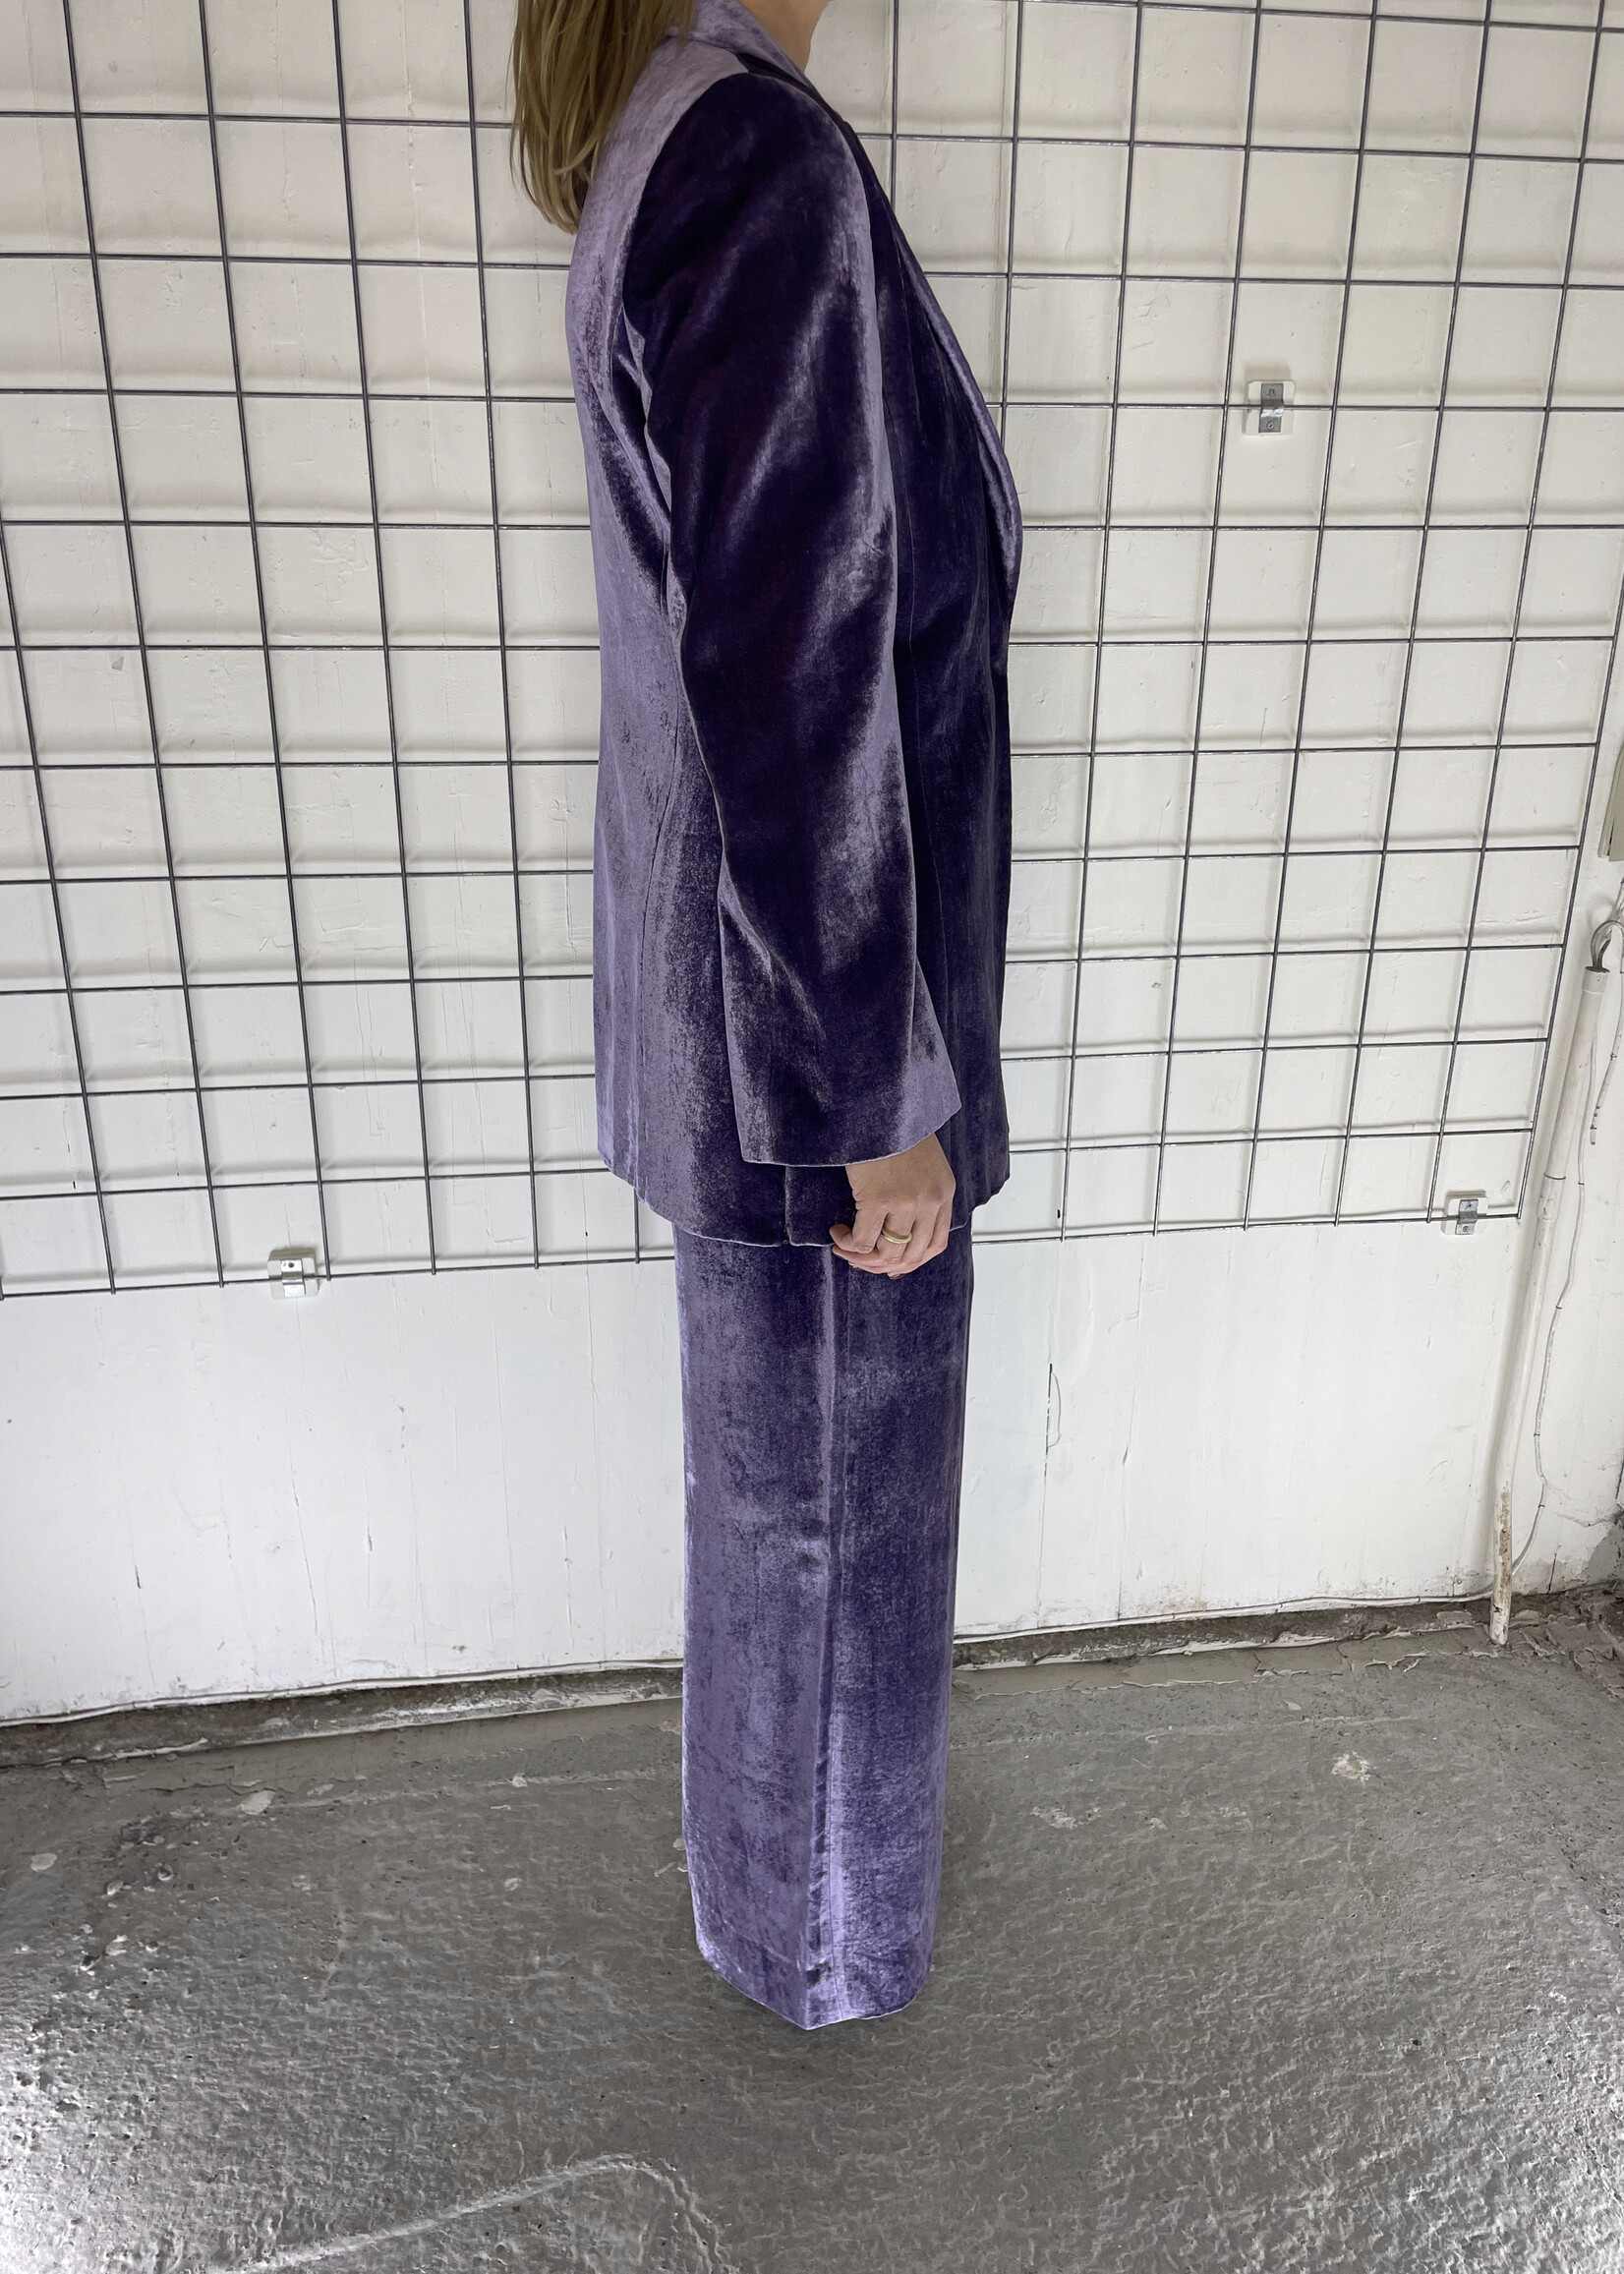 Gianfranco Ferre velvet purple suit